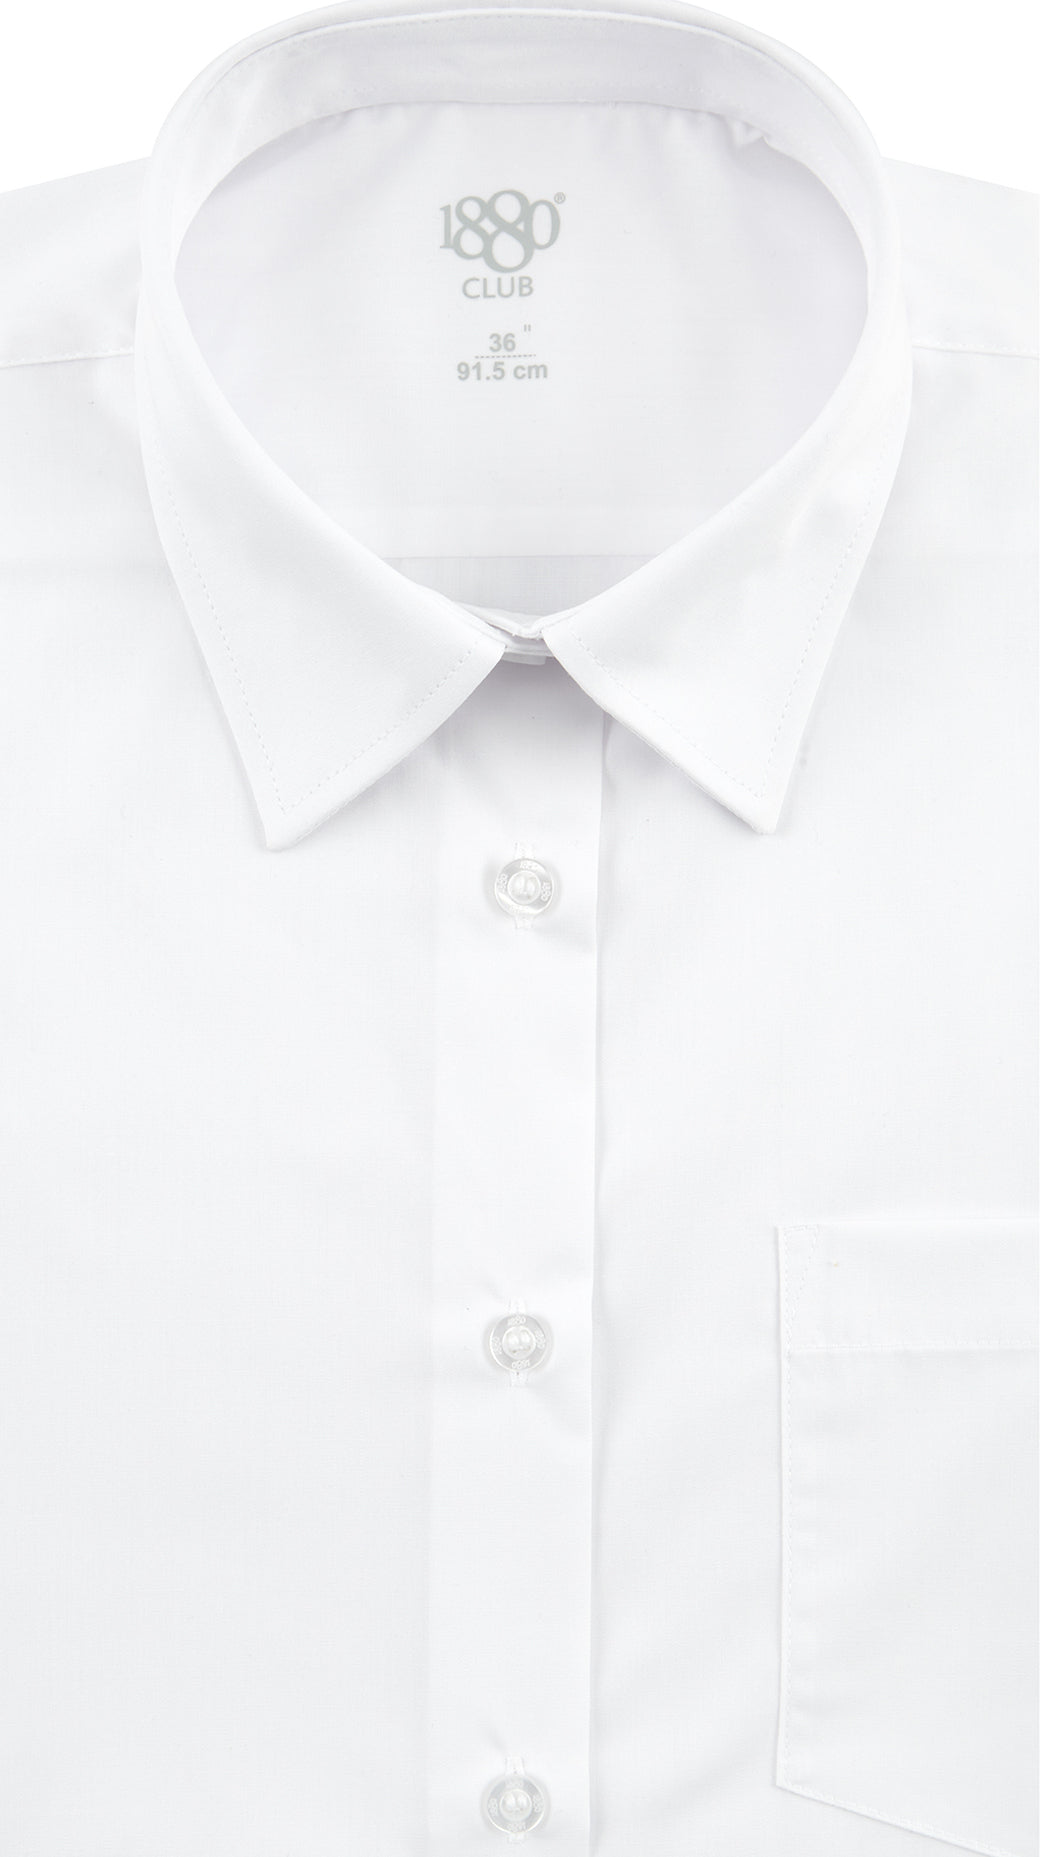 1880 Club  Long Sleeve White Shirt Regular Fit (TWIN PACK)